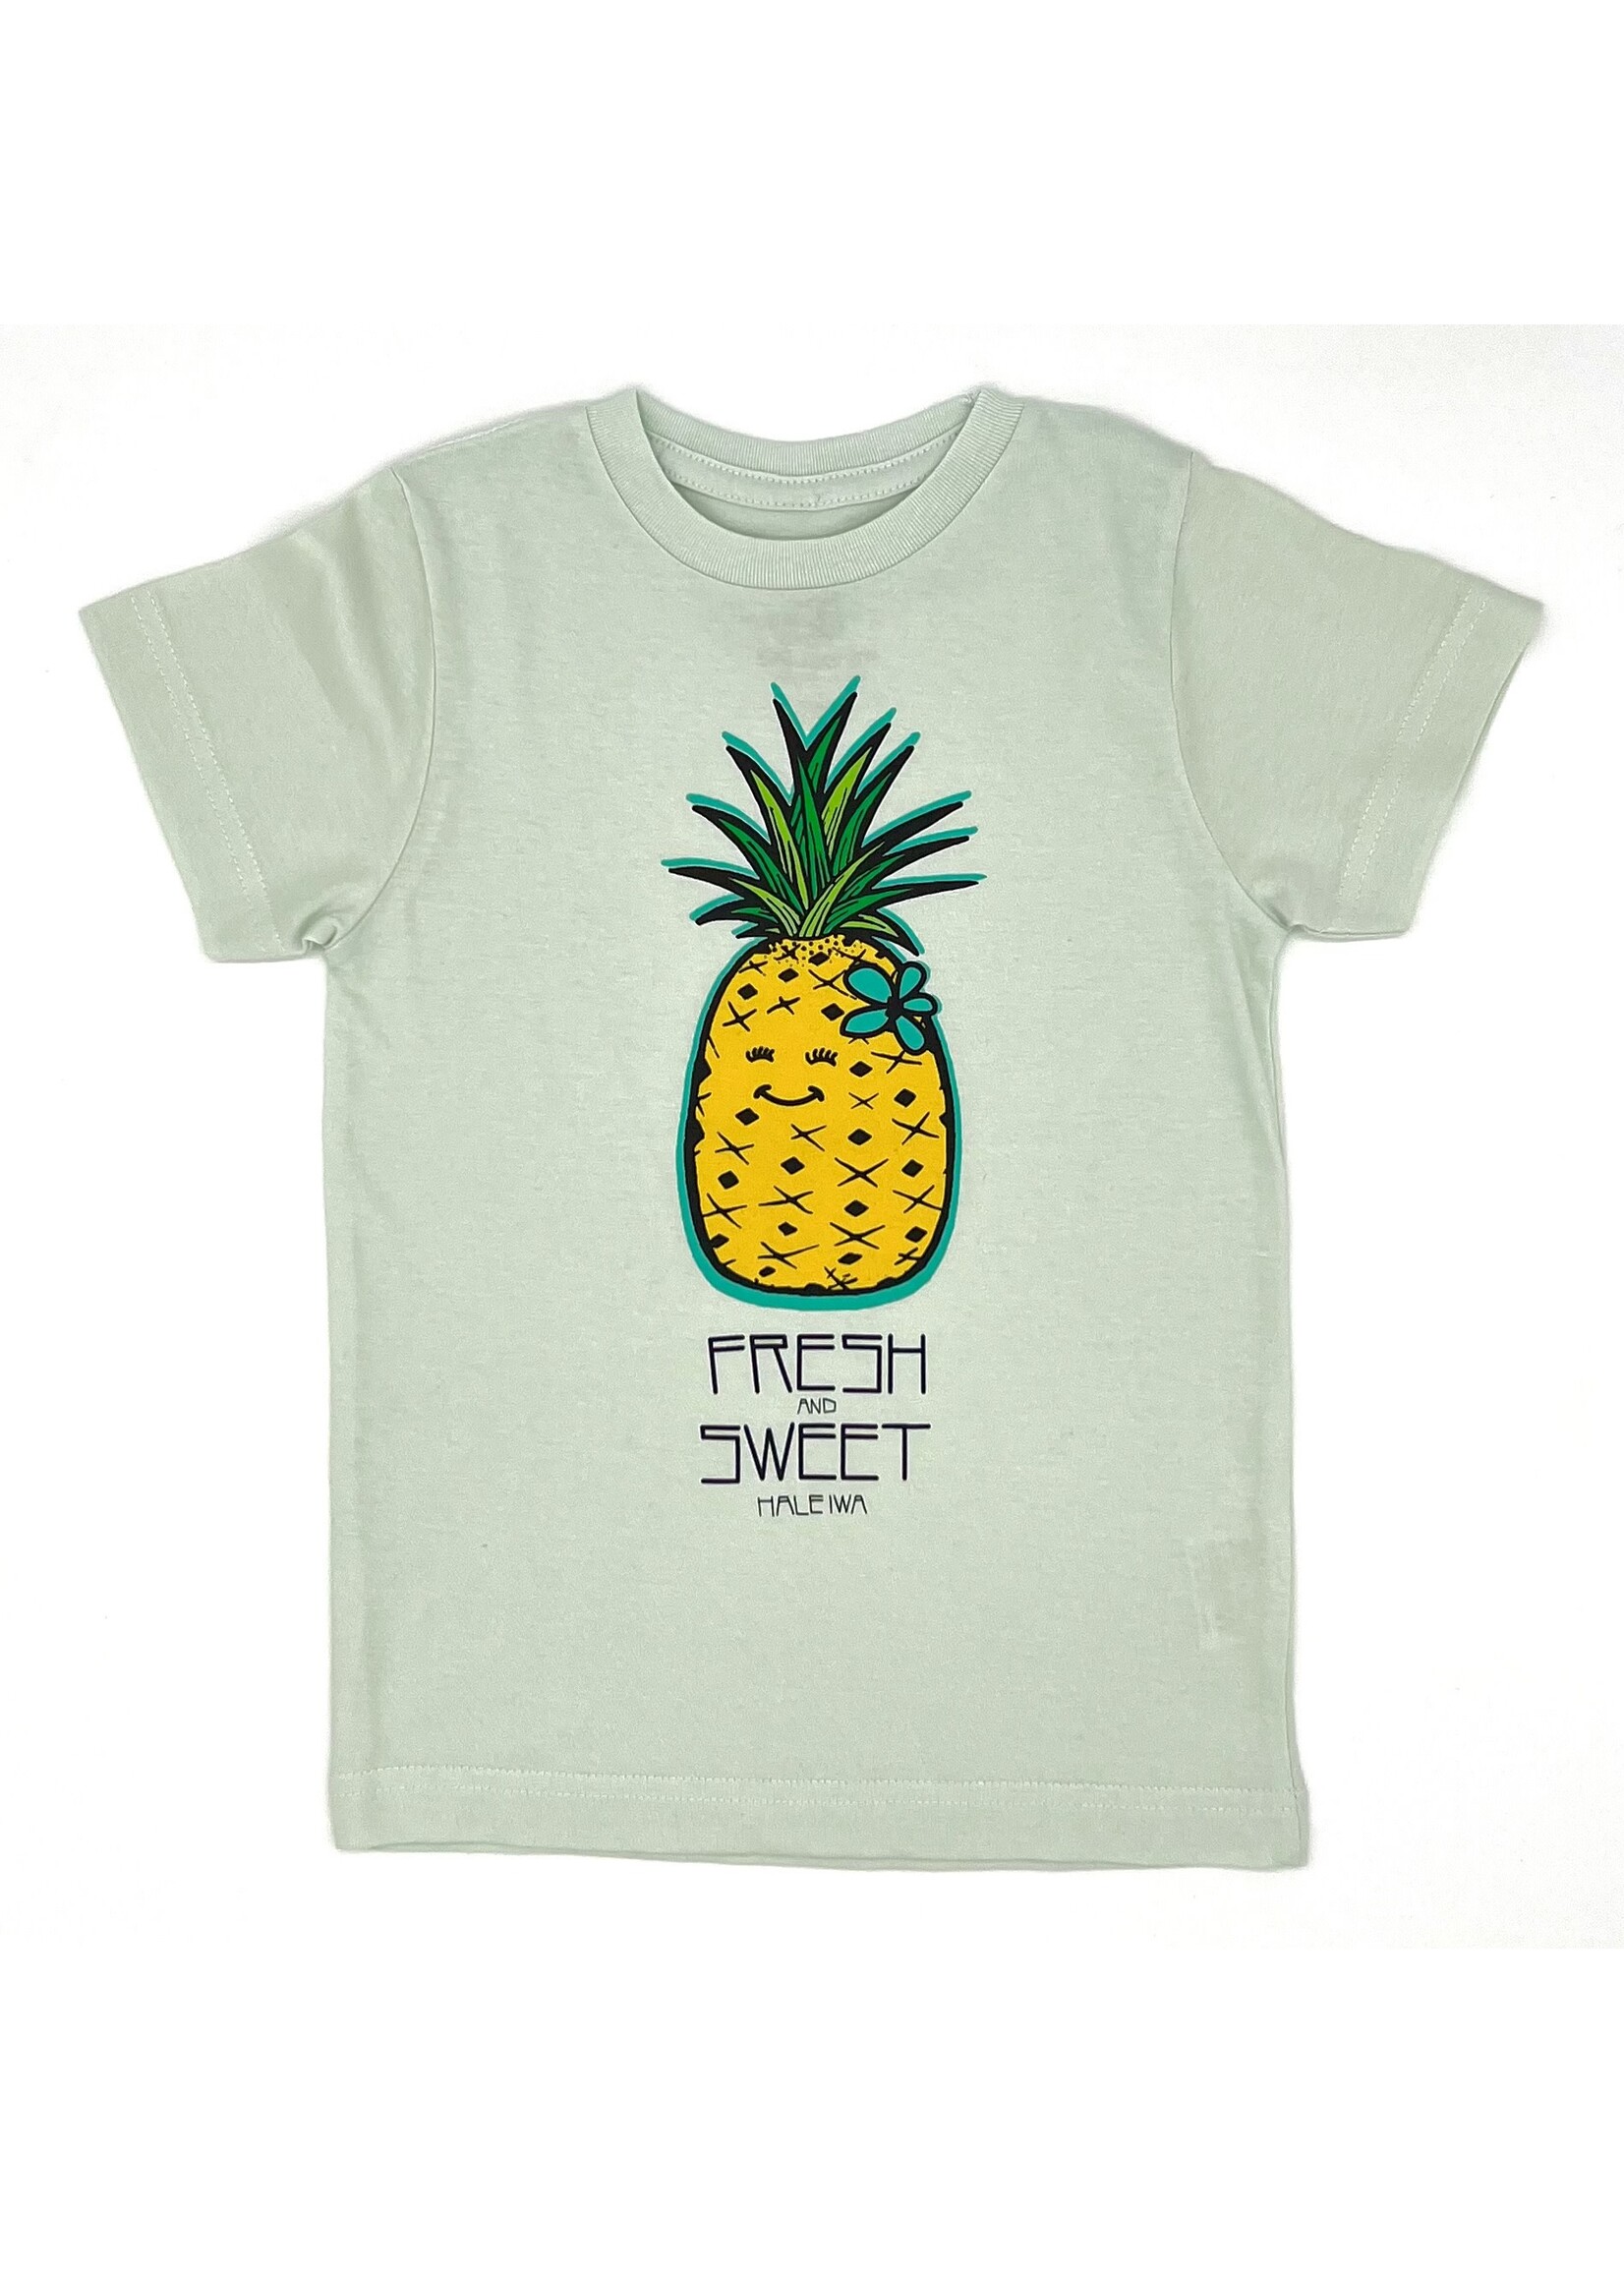 Tini Manini pineapple - shirt